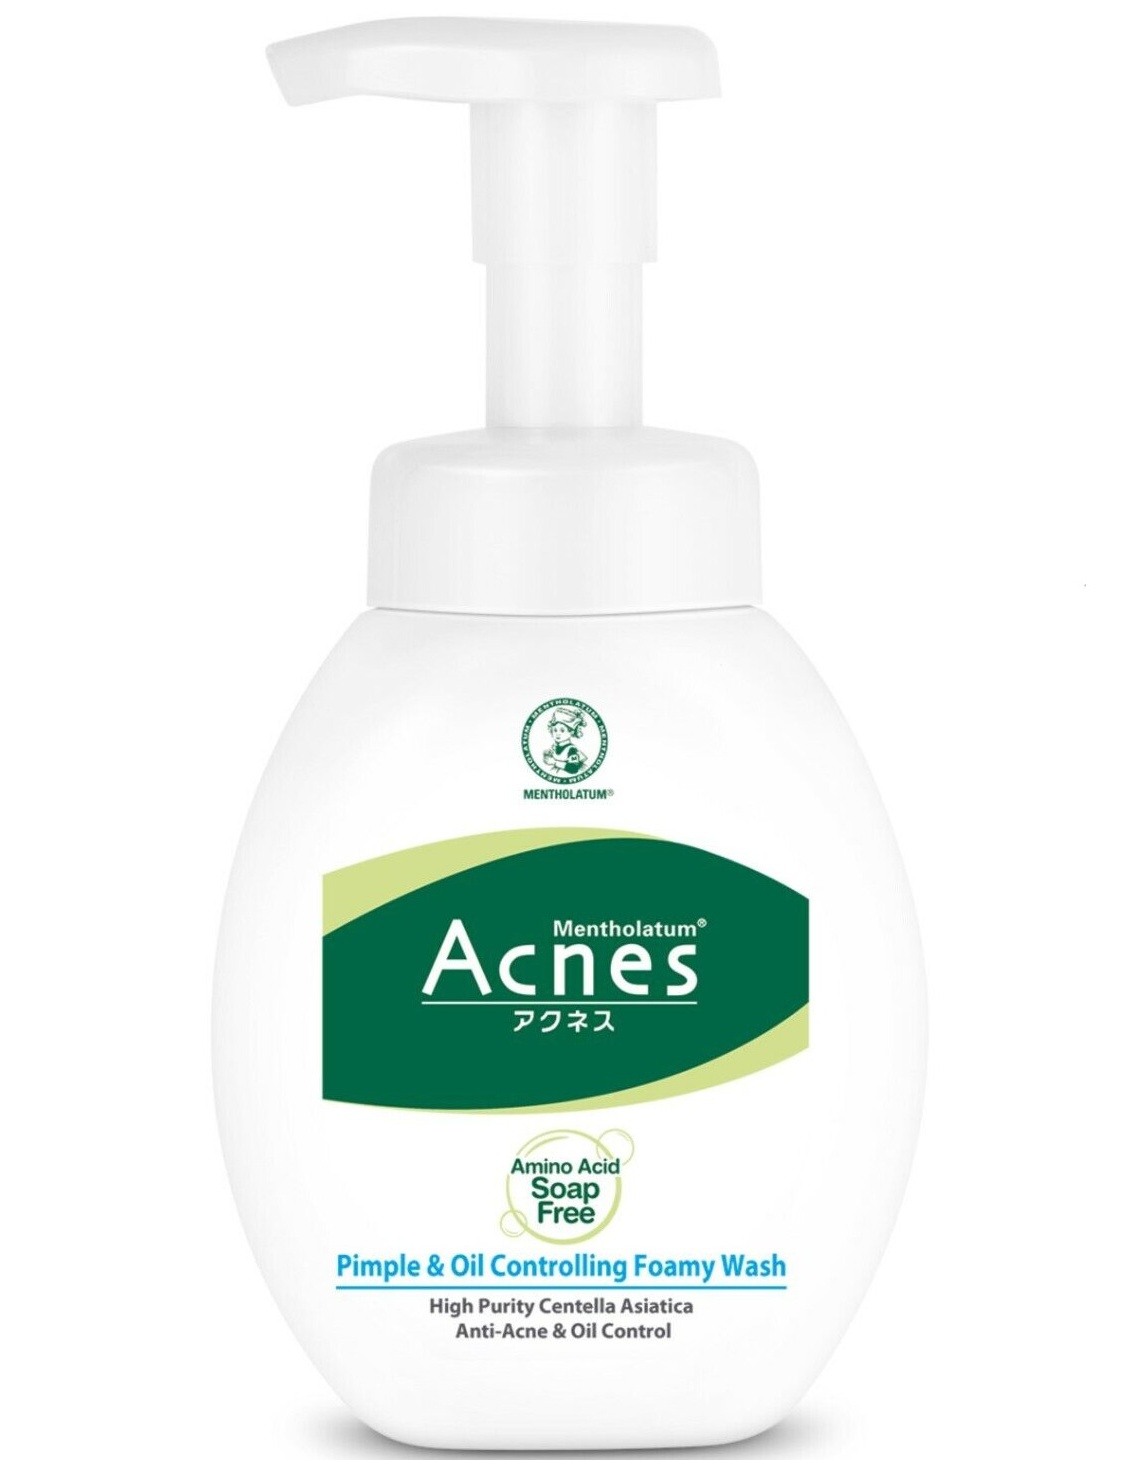 Acnes Mentholatum Acne Pimple And Oil Controlling Foamy Wash